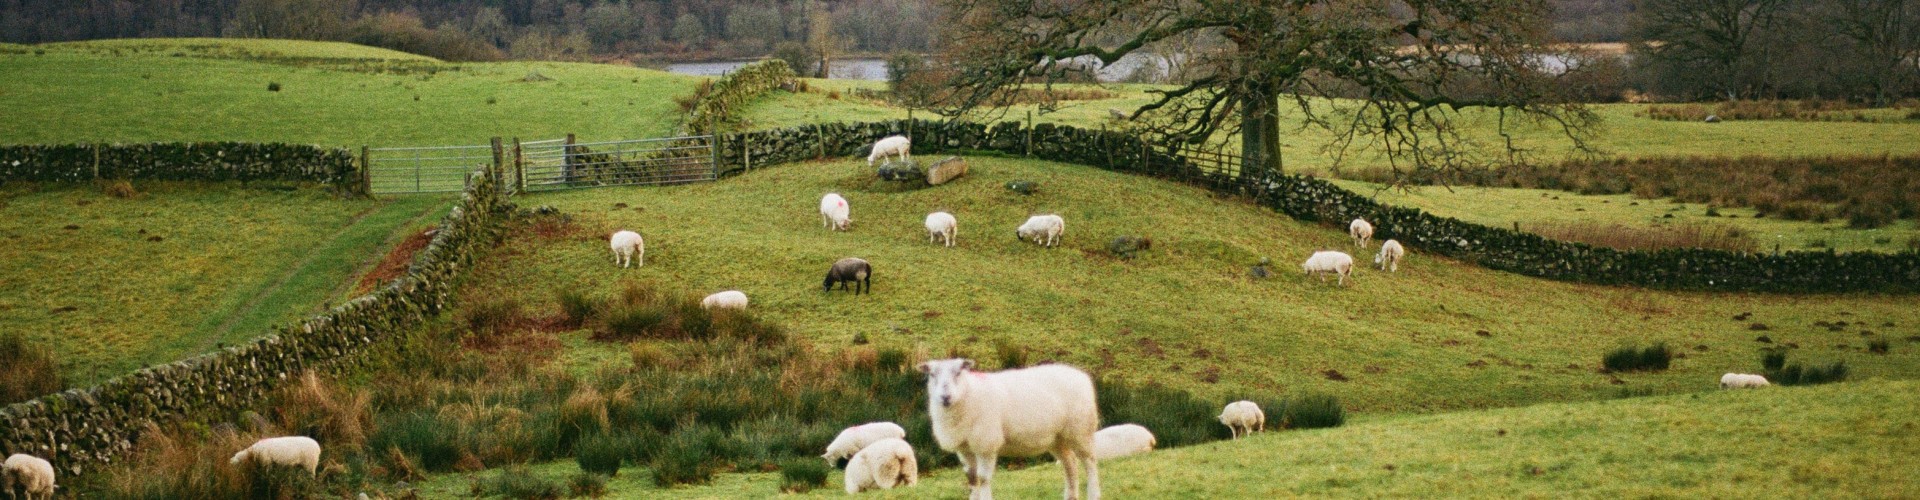 Sheep on a farm field